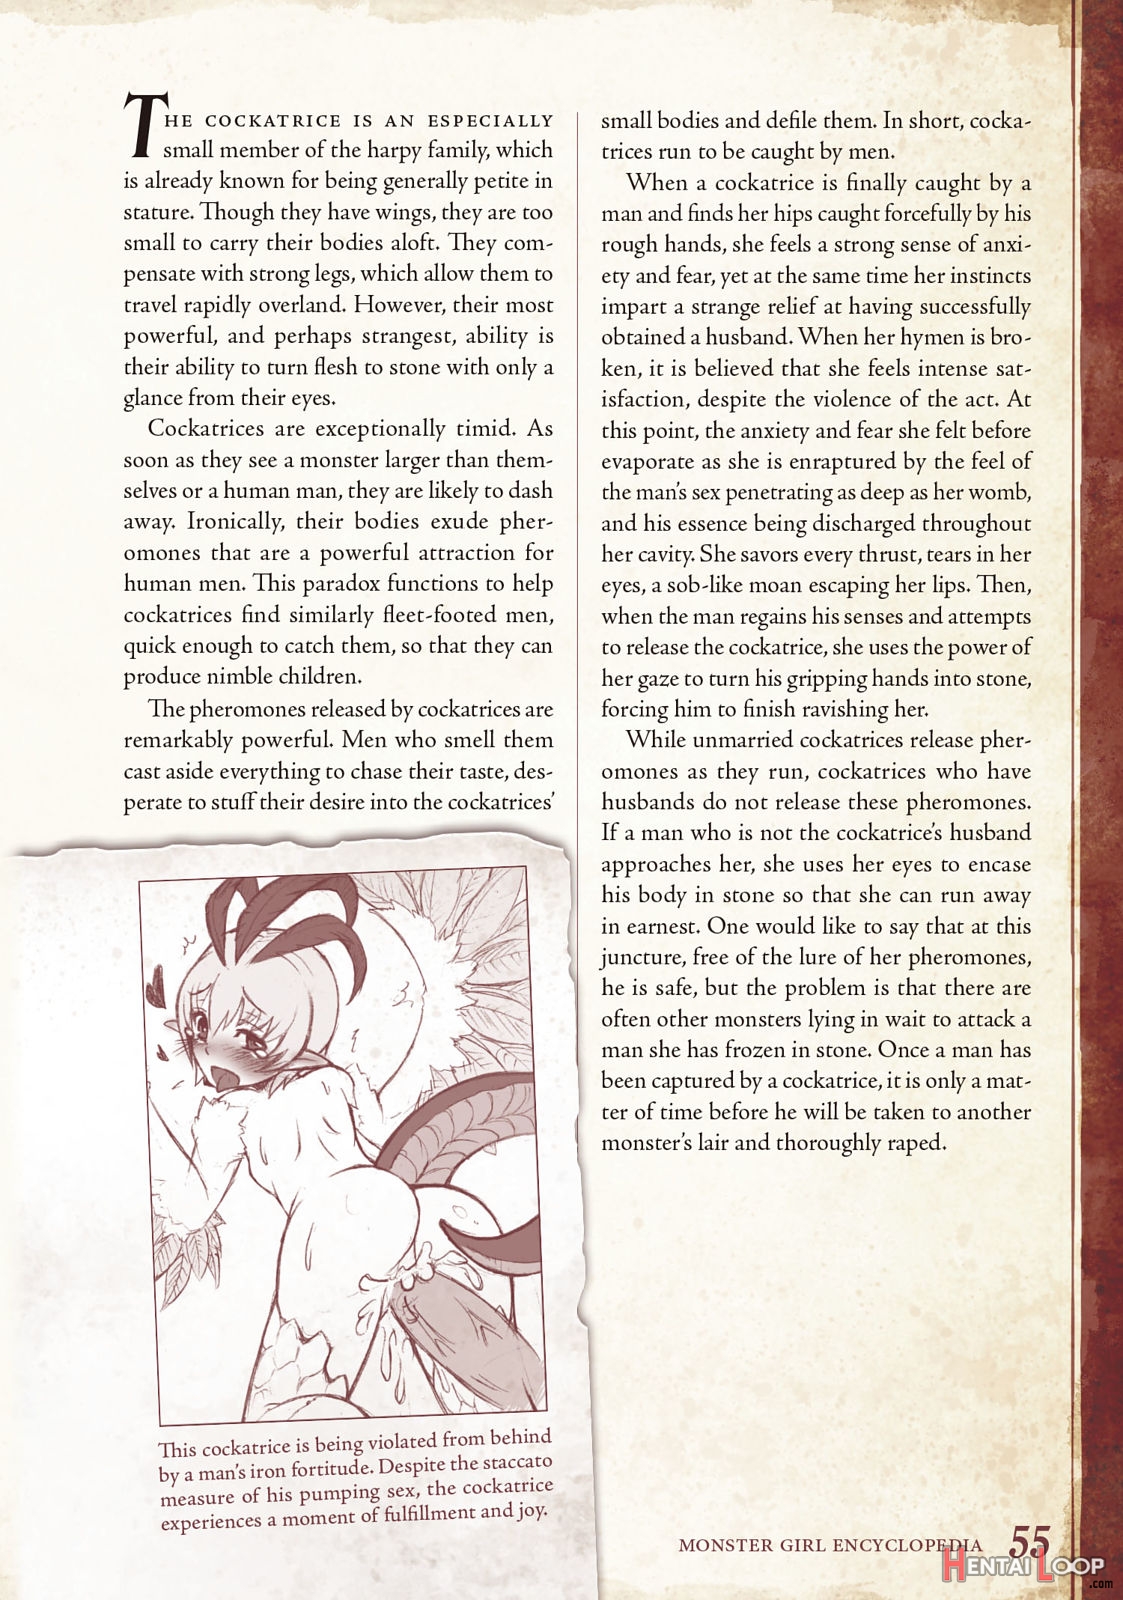 Monster Girl Encyclopedia Vol. 1 page 56